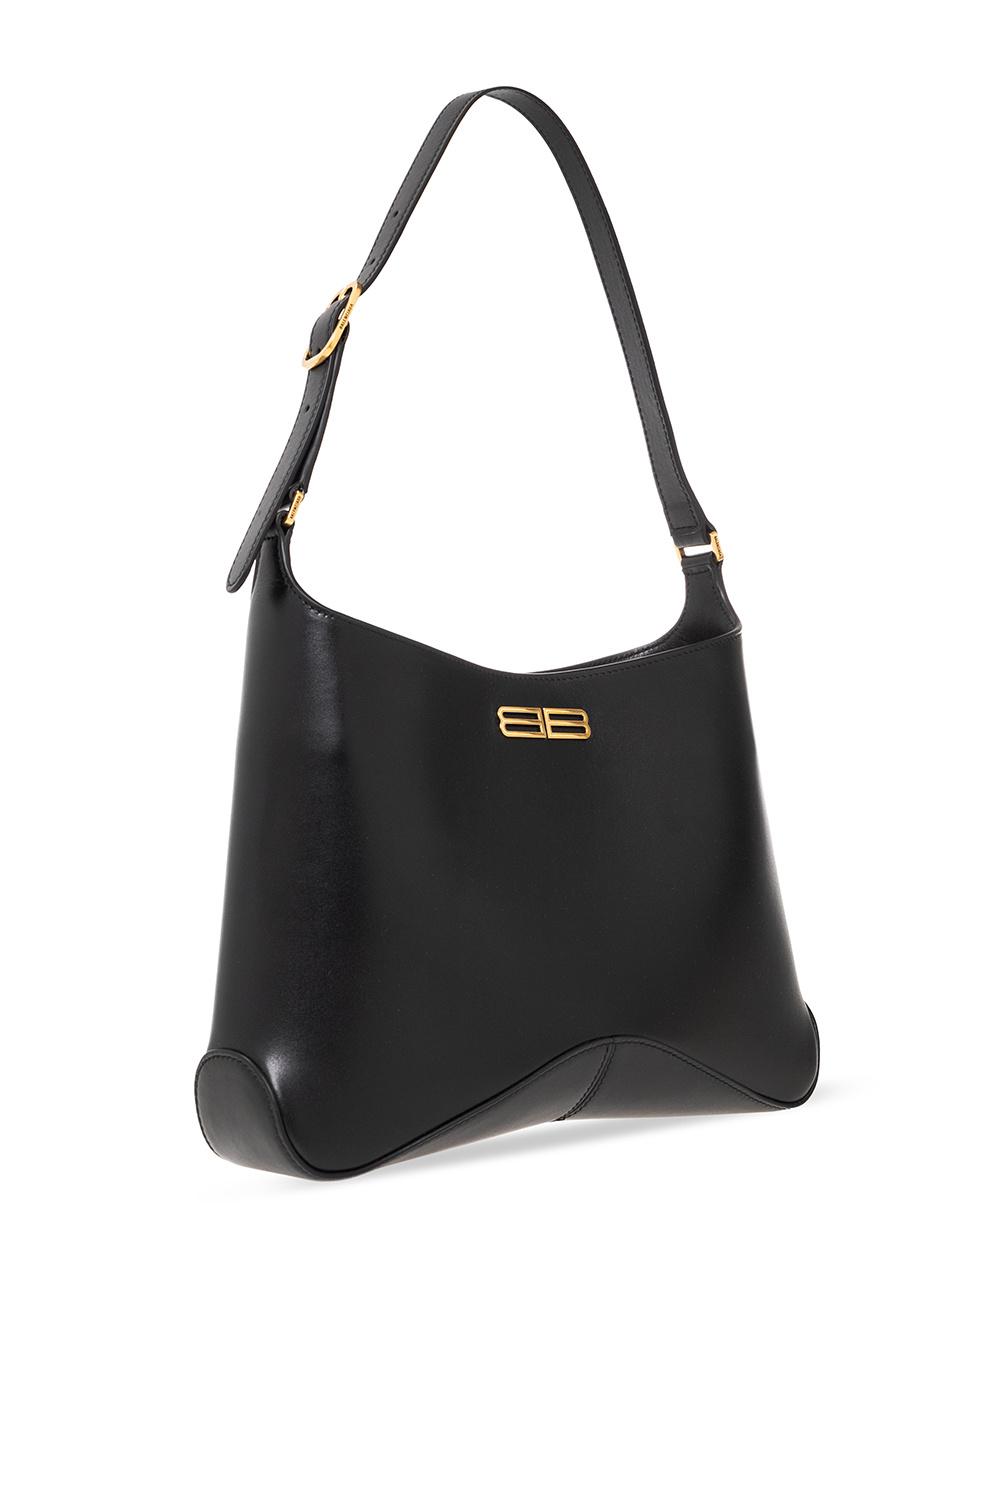 Balenciaga 'xx Medium' Hobo Bag in Black | Lyst